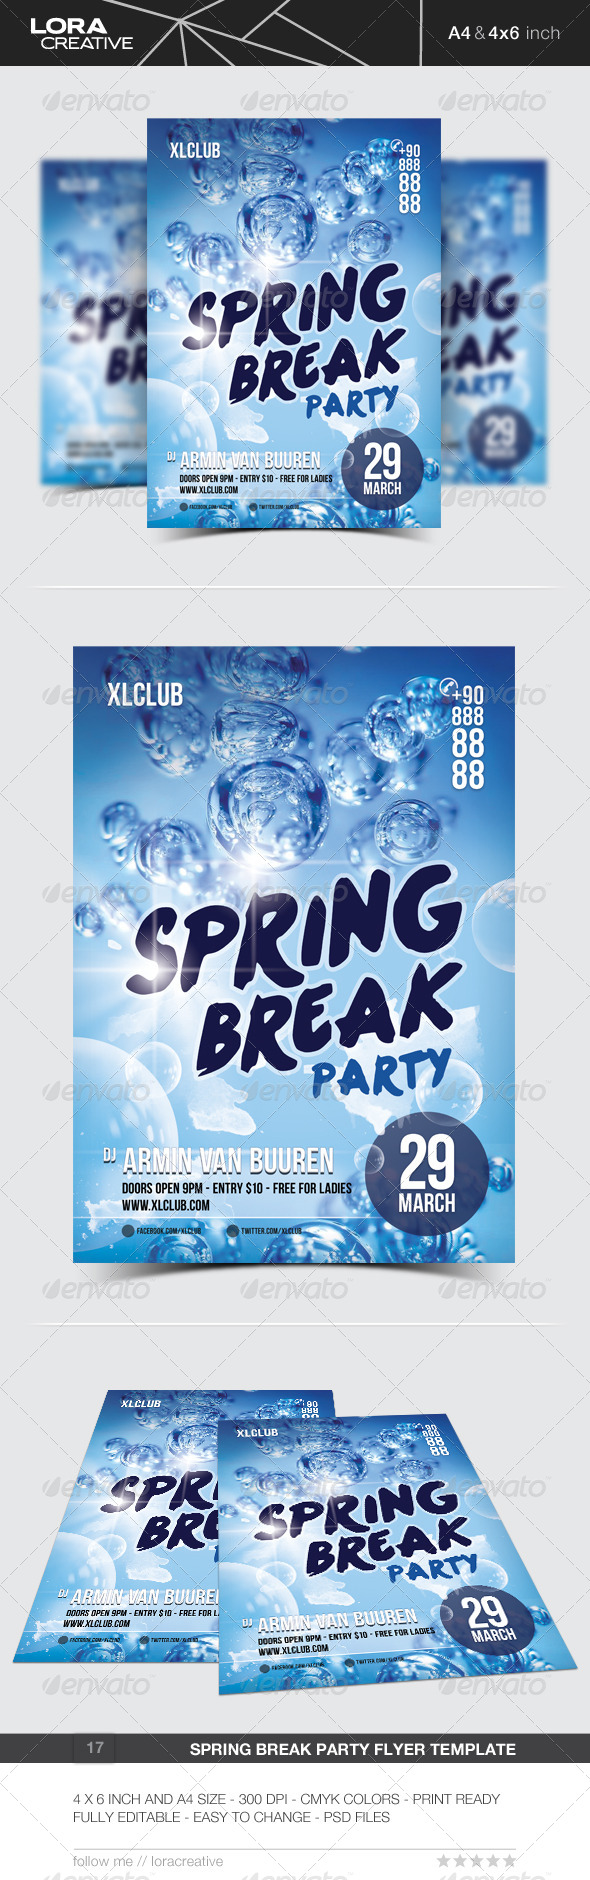 Spring Break Party Flyer / Poster - 17